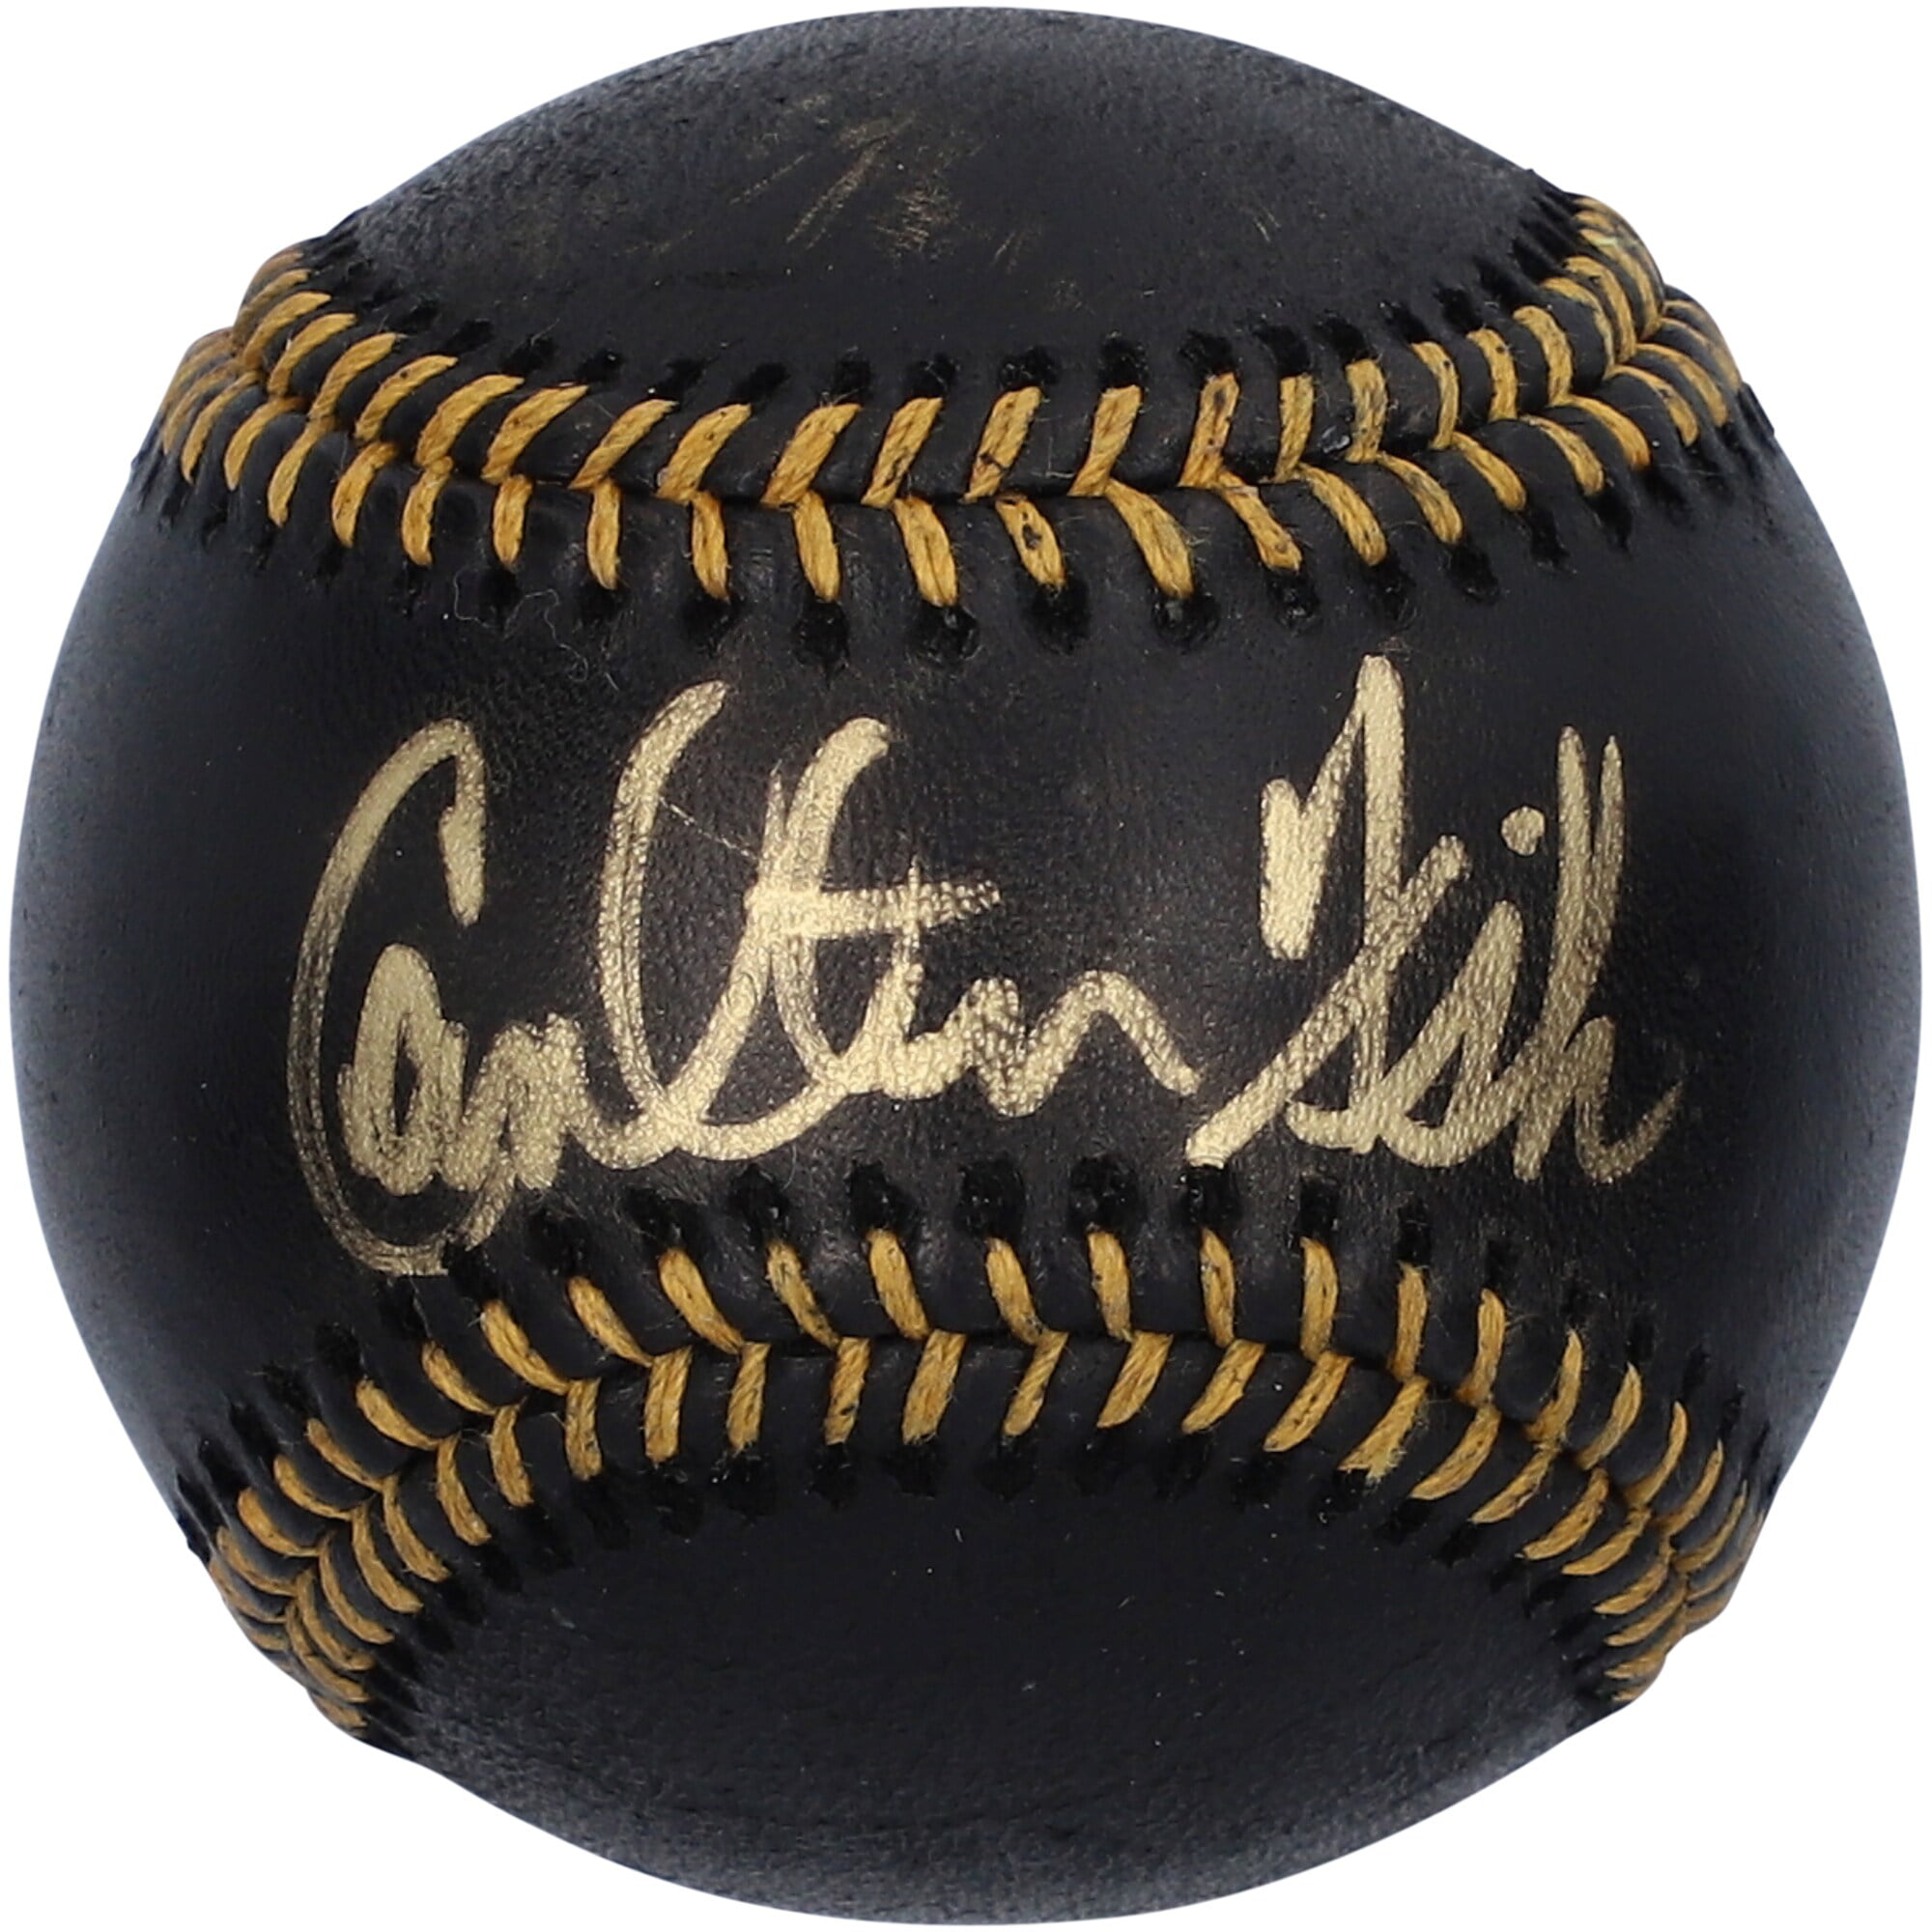 Pedro Martinez Autograph Baseball 2004 World Series - Autographed